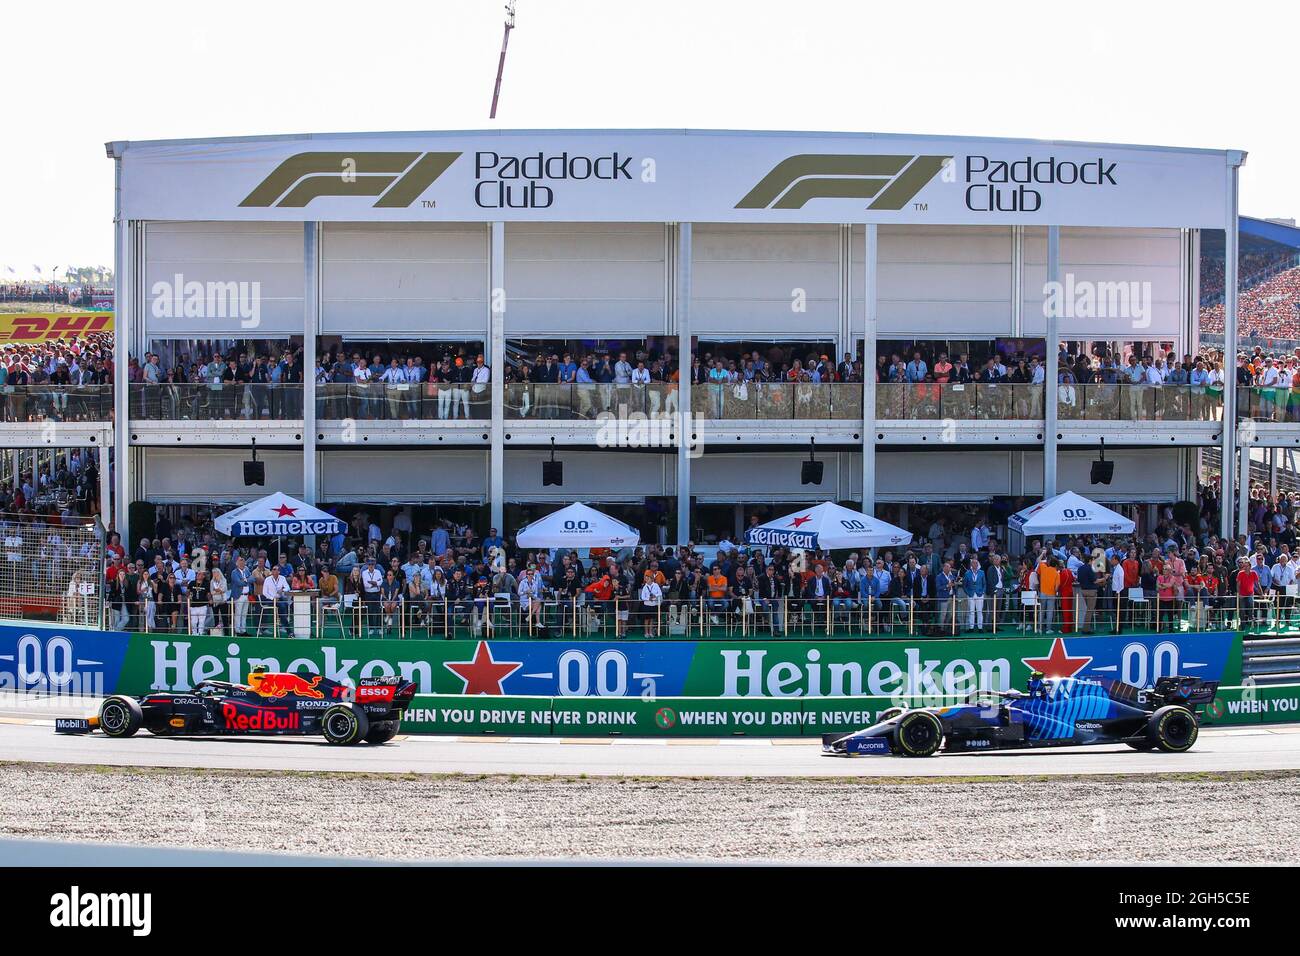 F1 Heineken Silver Las Vegas Grand Prix sells out Paddock Club